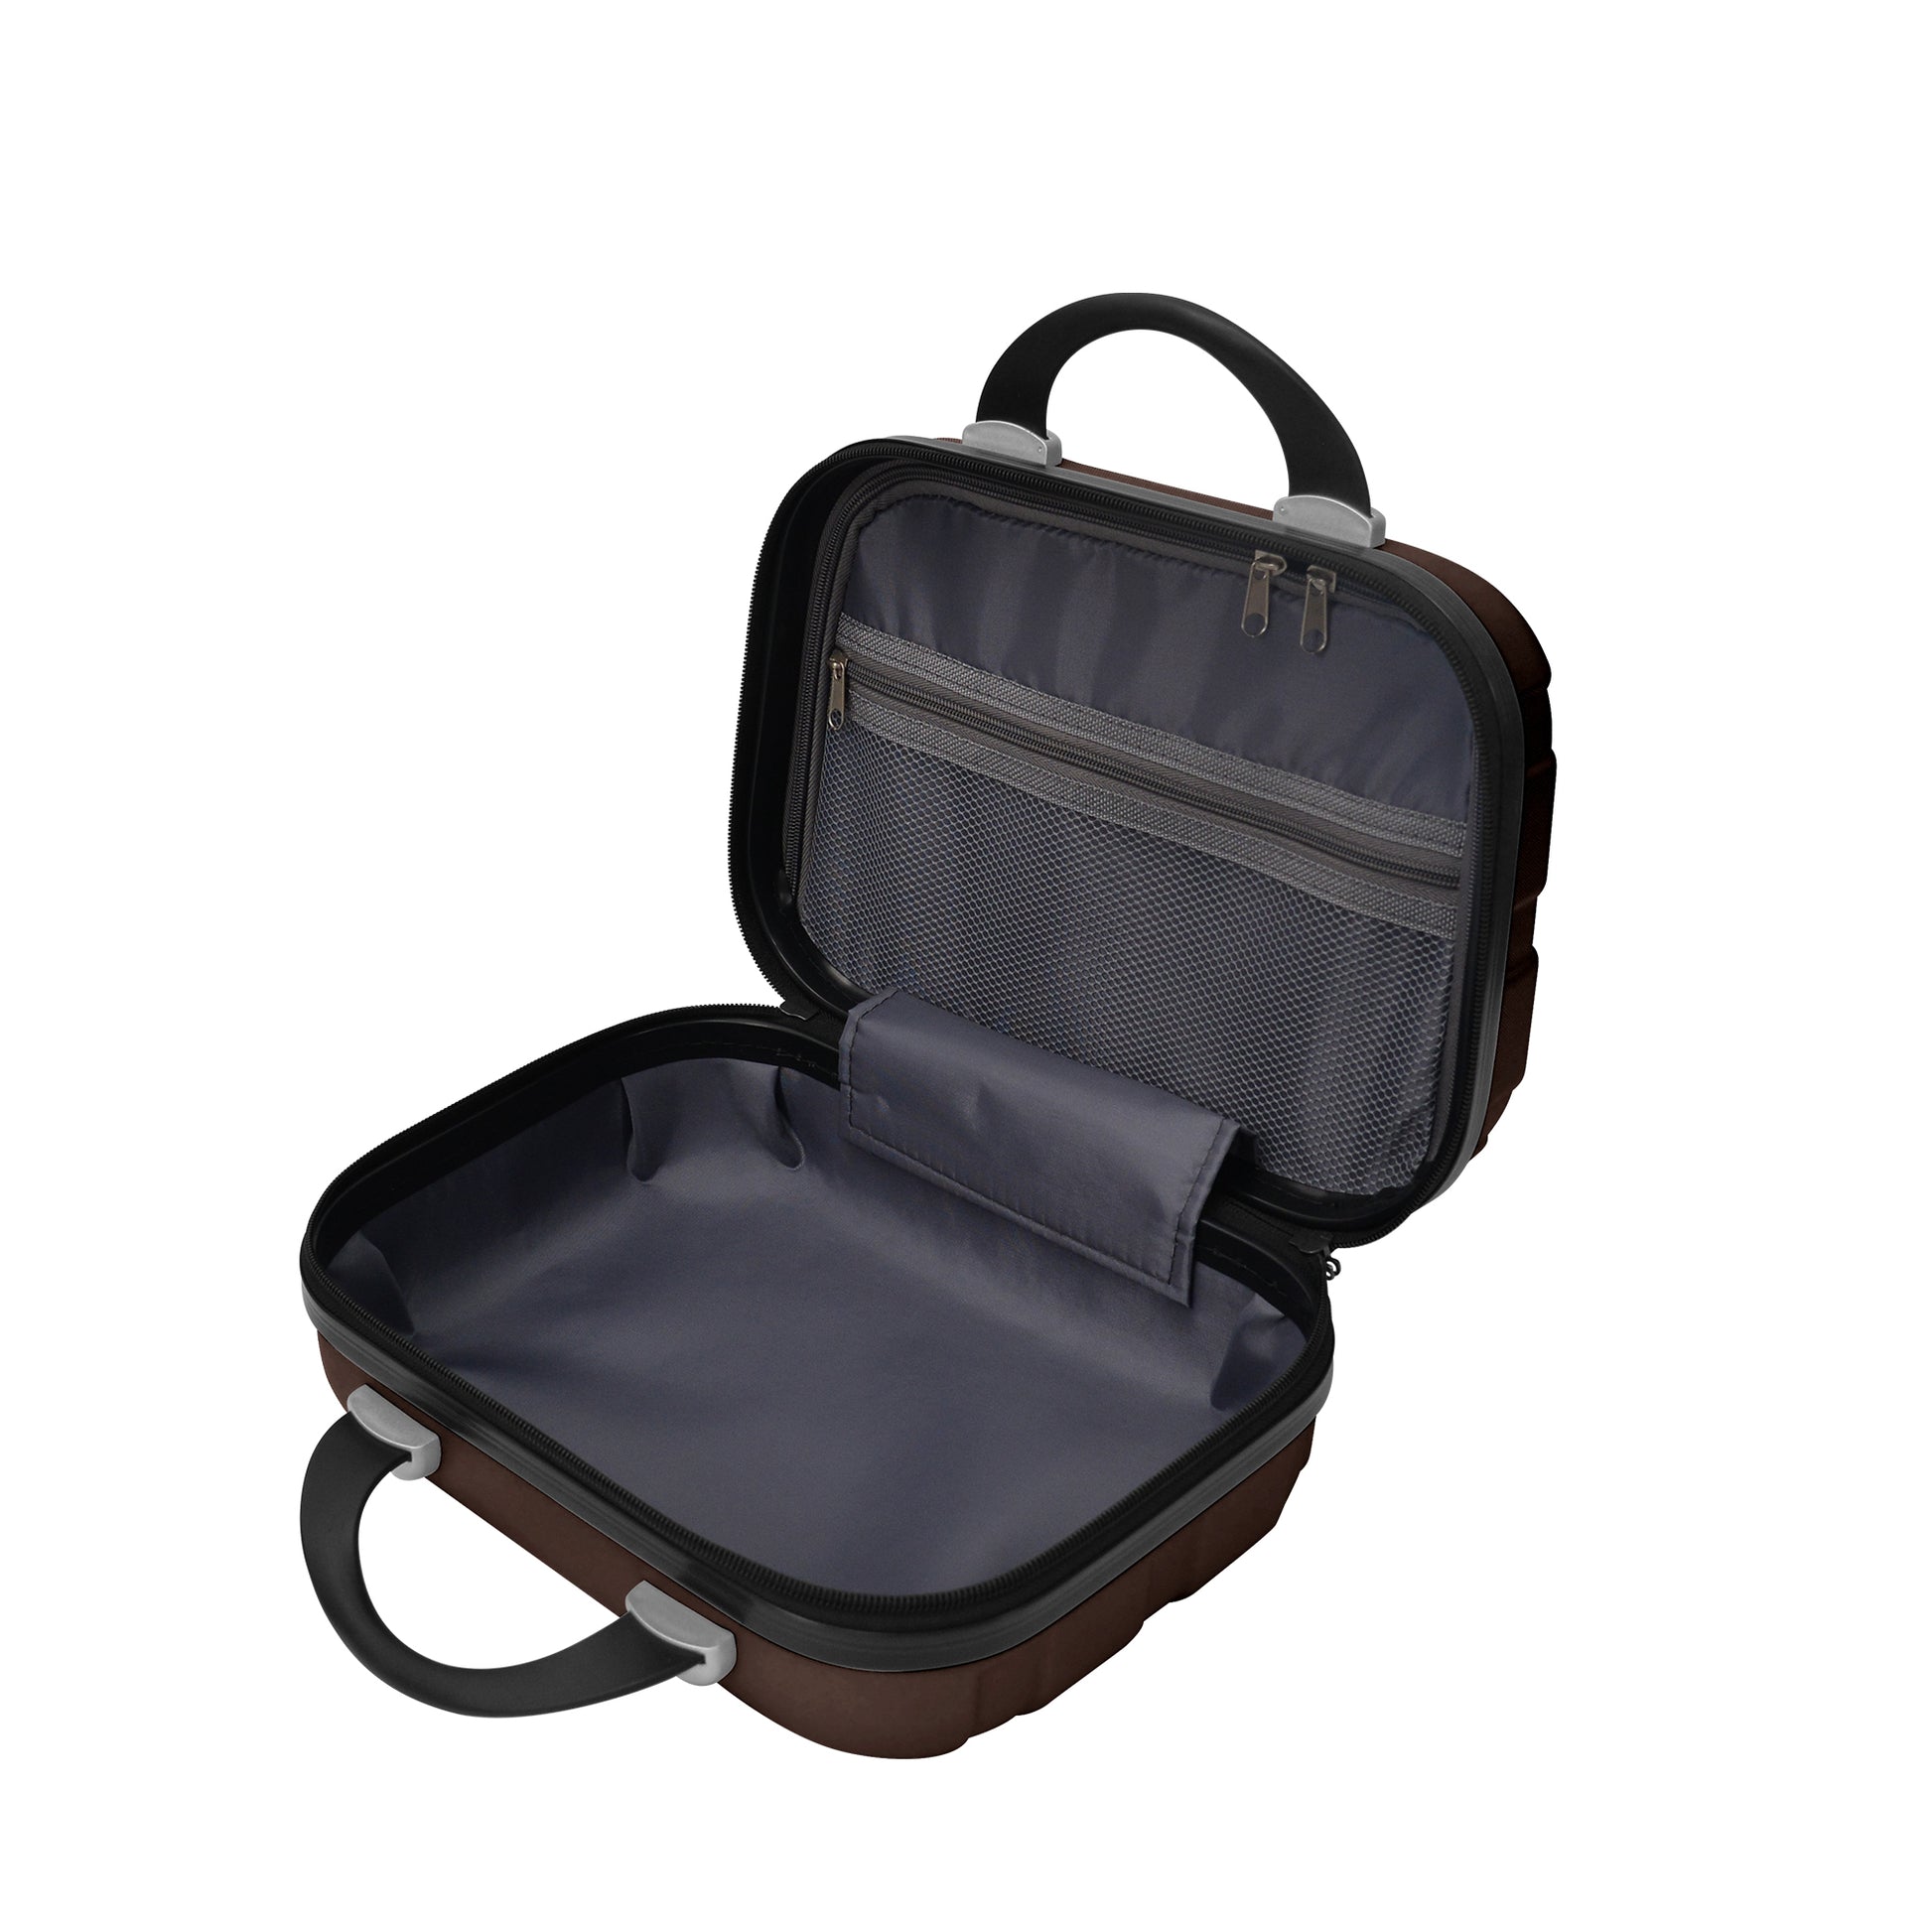 4 Piece Hard Shell Luggage Set,Carry On Suitcase